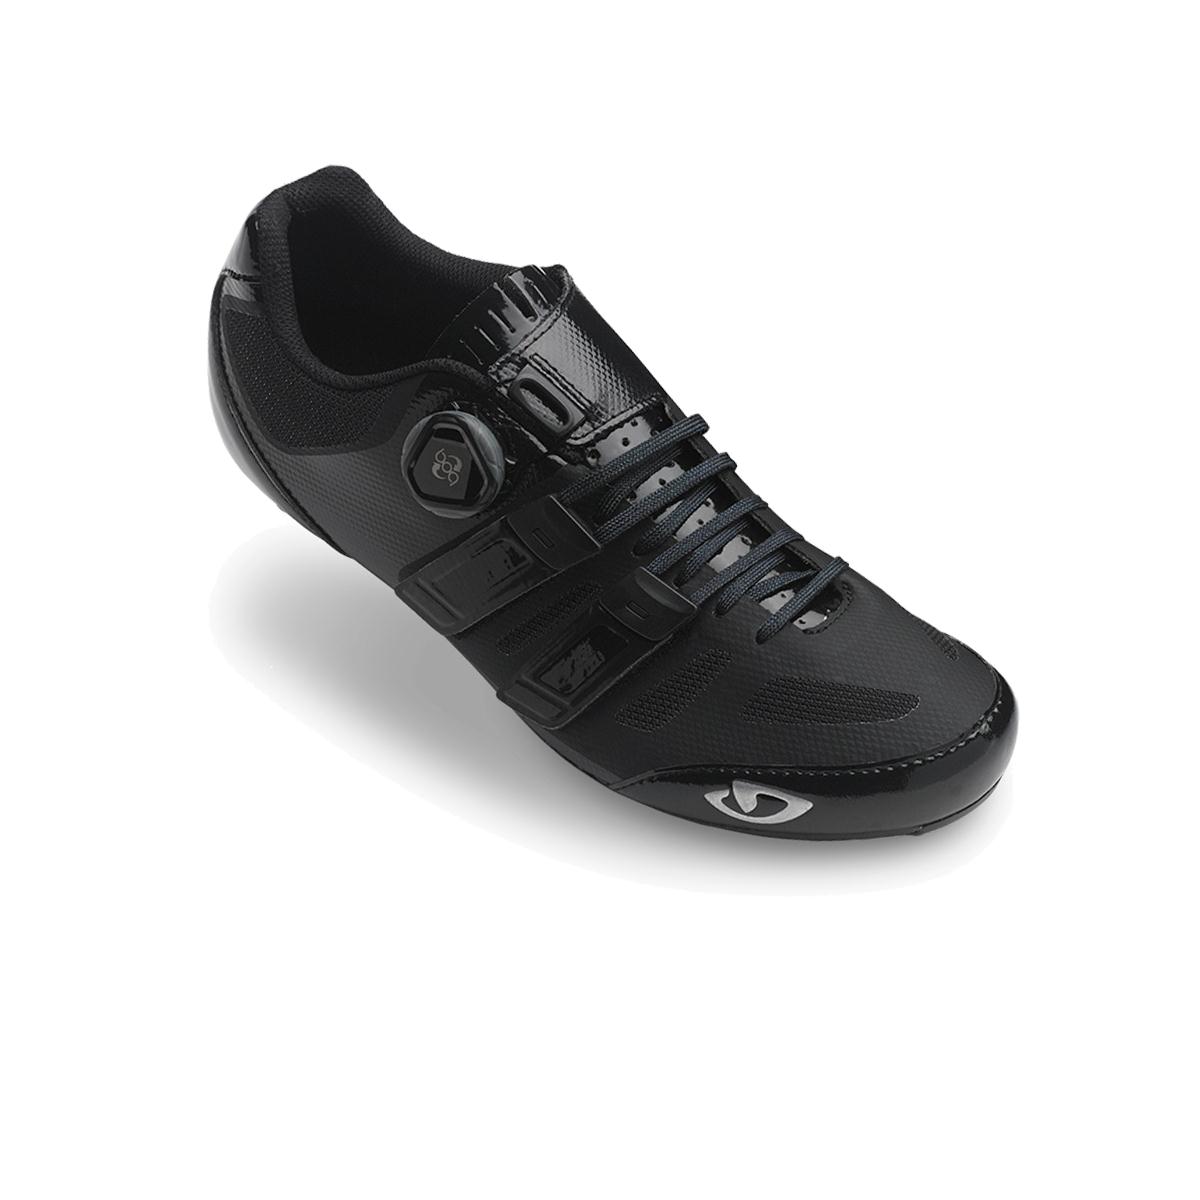 GIRO Sentrie Techlace Road Cycling Shoes 2018 Black 48